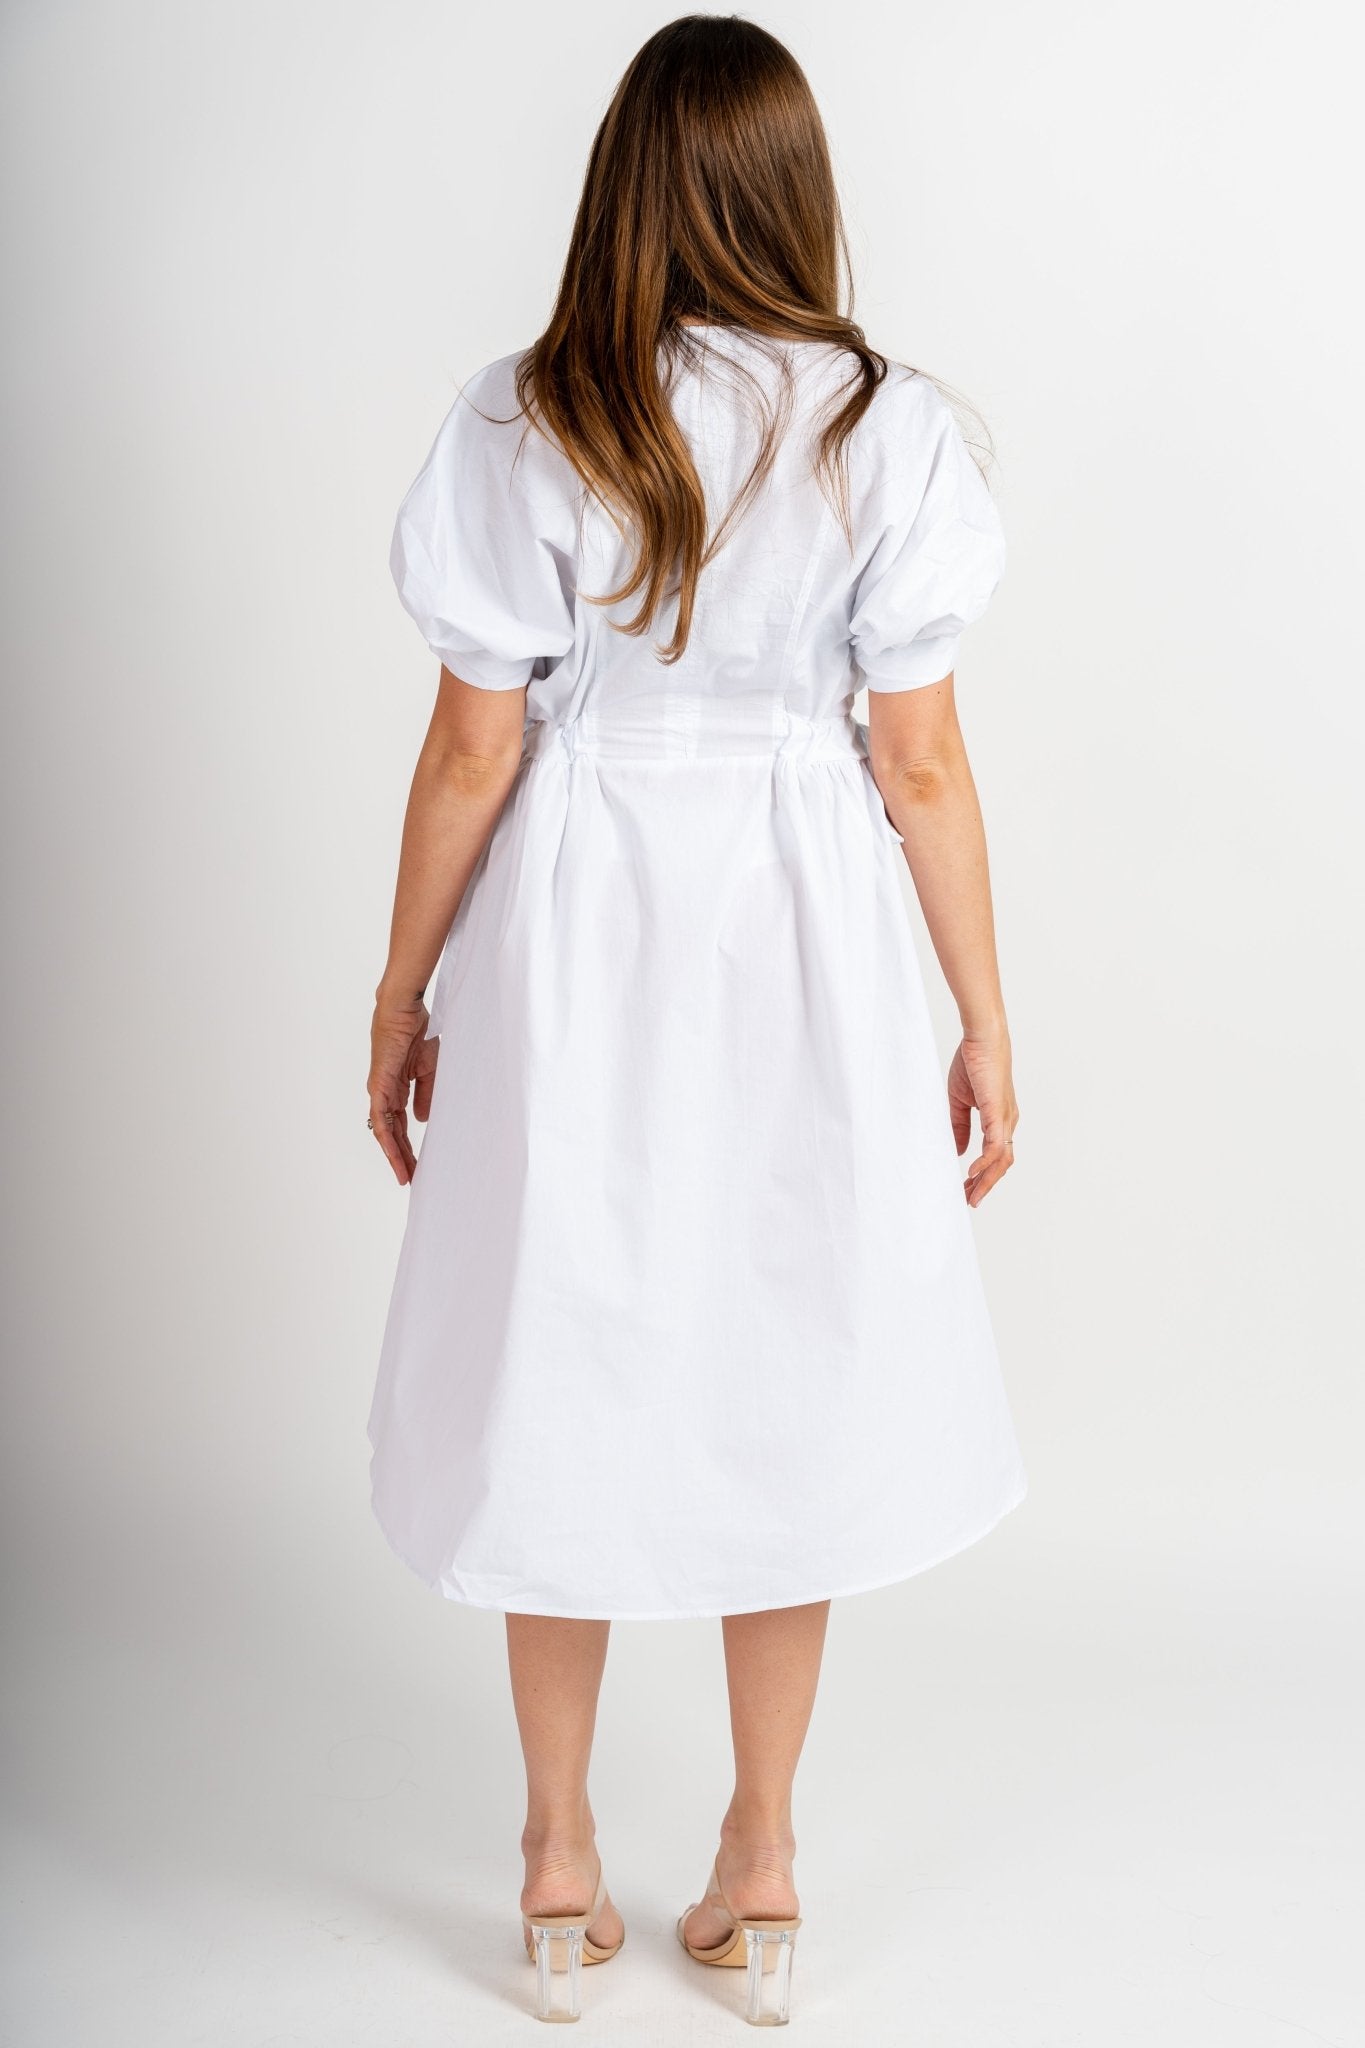 Tiered babydoll dress white Stylish Dress - Womens Fashion Dresses at Lush Fashion Lounge Boutique in Oklahoma City